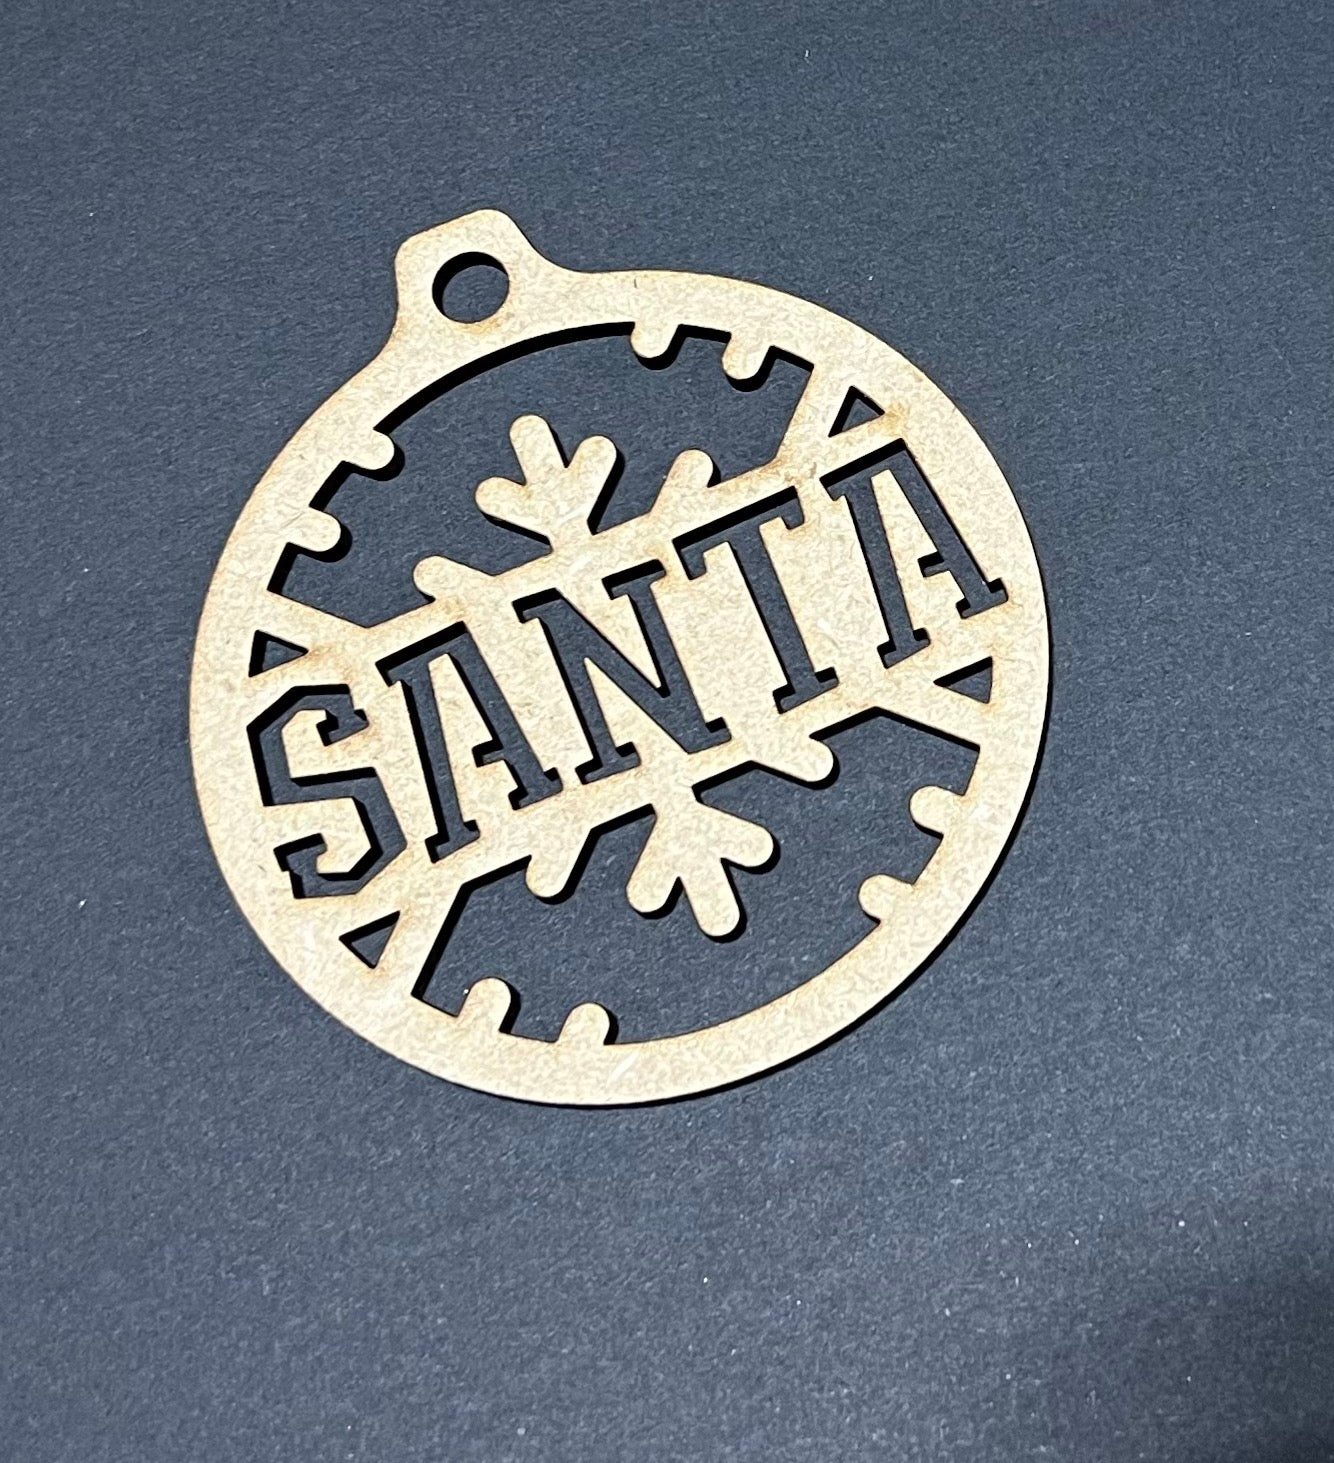 Christmas Words Ornament | Laser Engraved Ornament | Christmas Ornament | XMAS, Peace, Love,Merry, Santa, or Joy Ornament